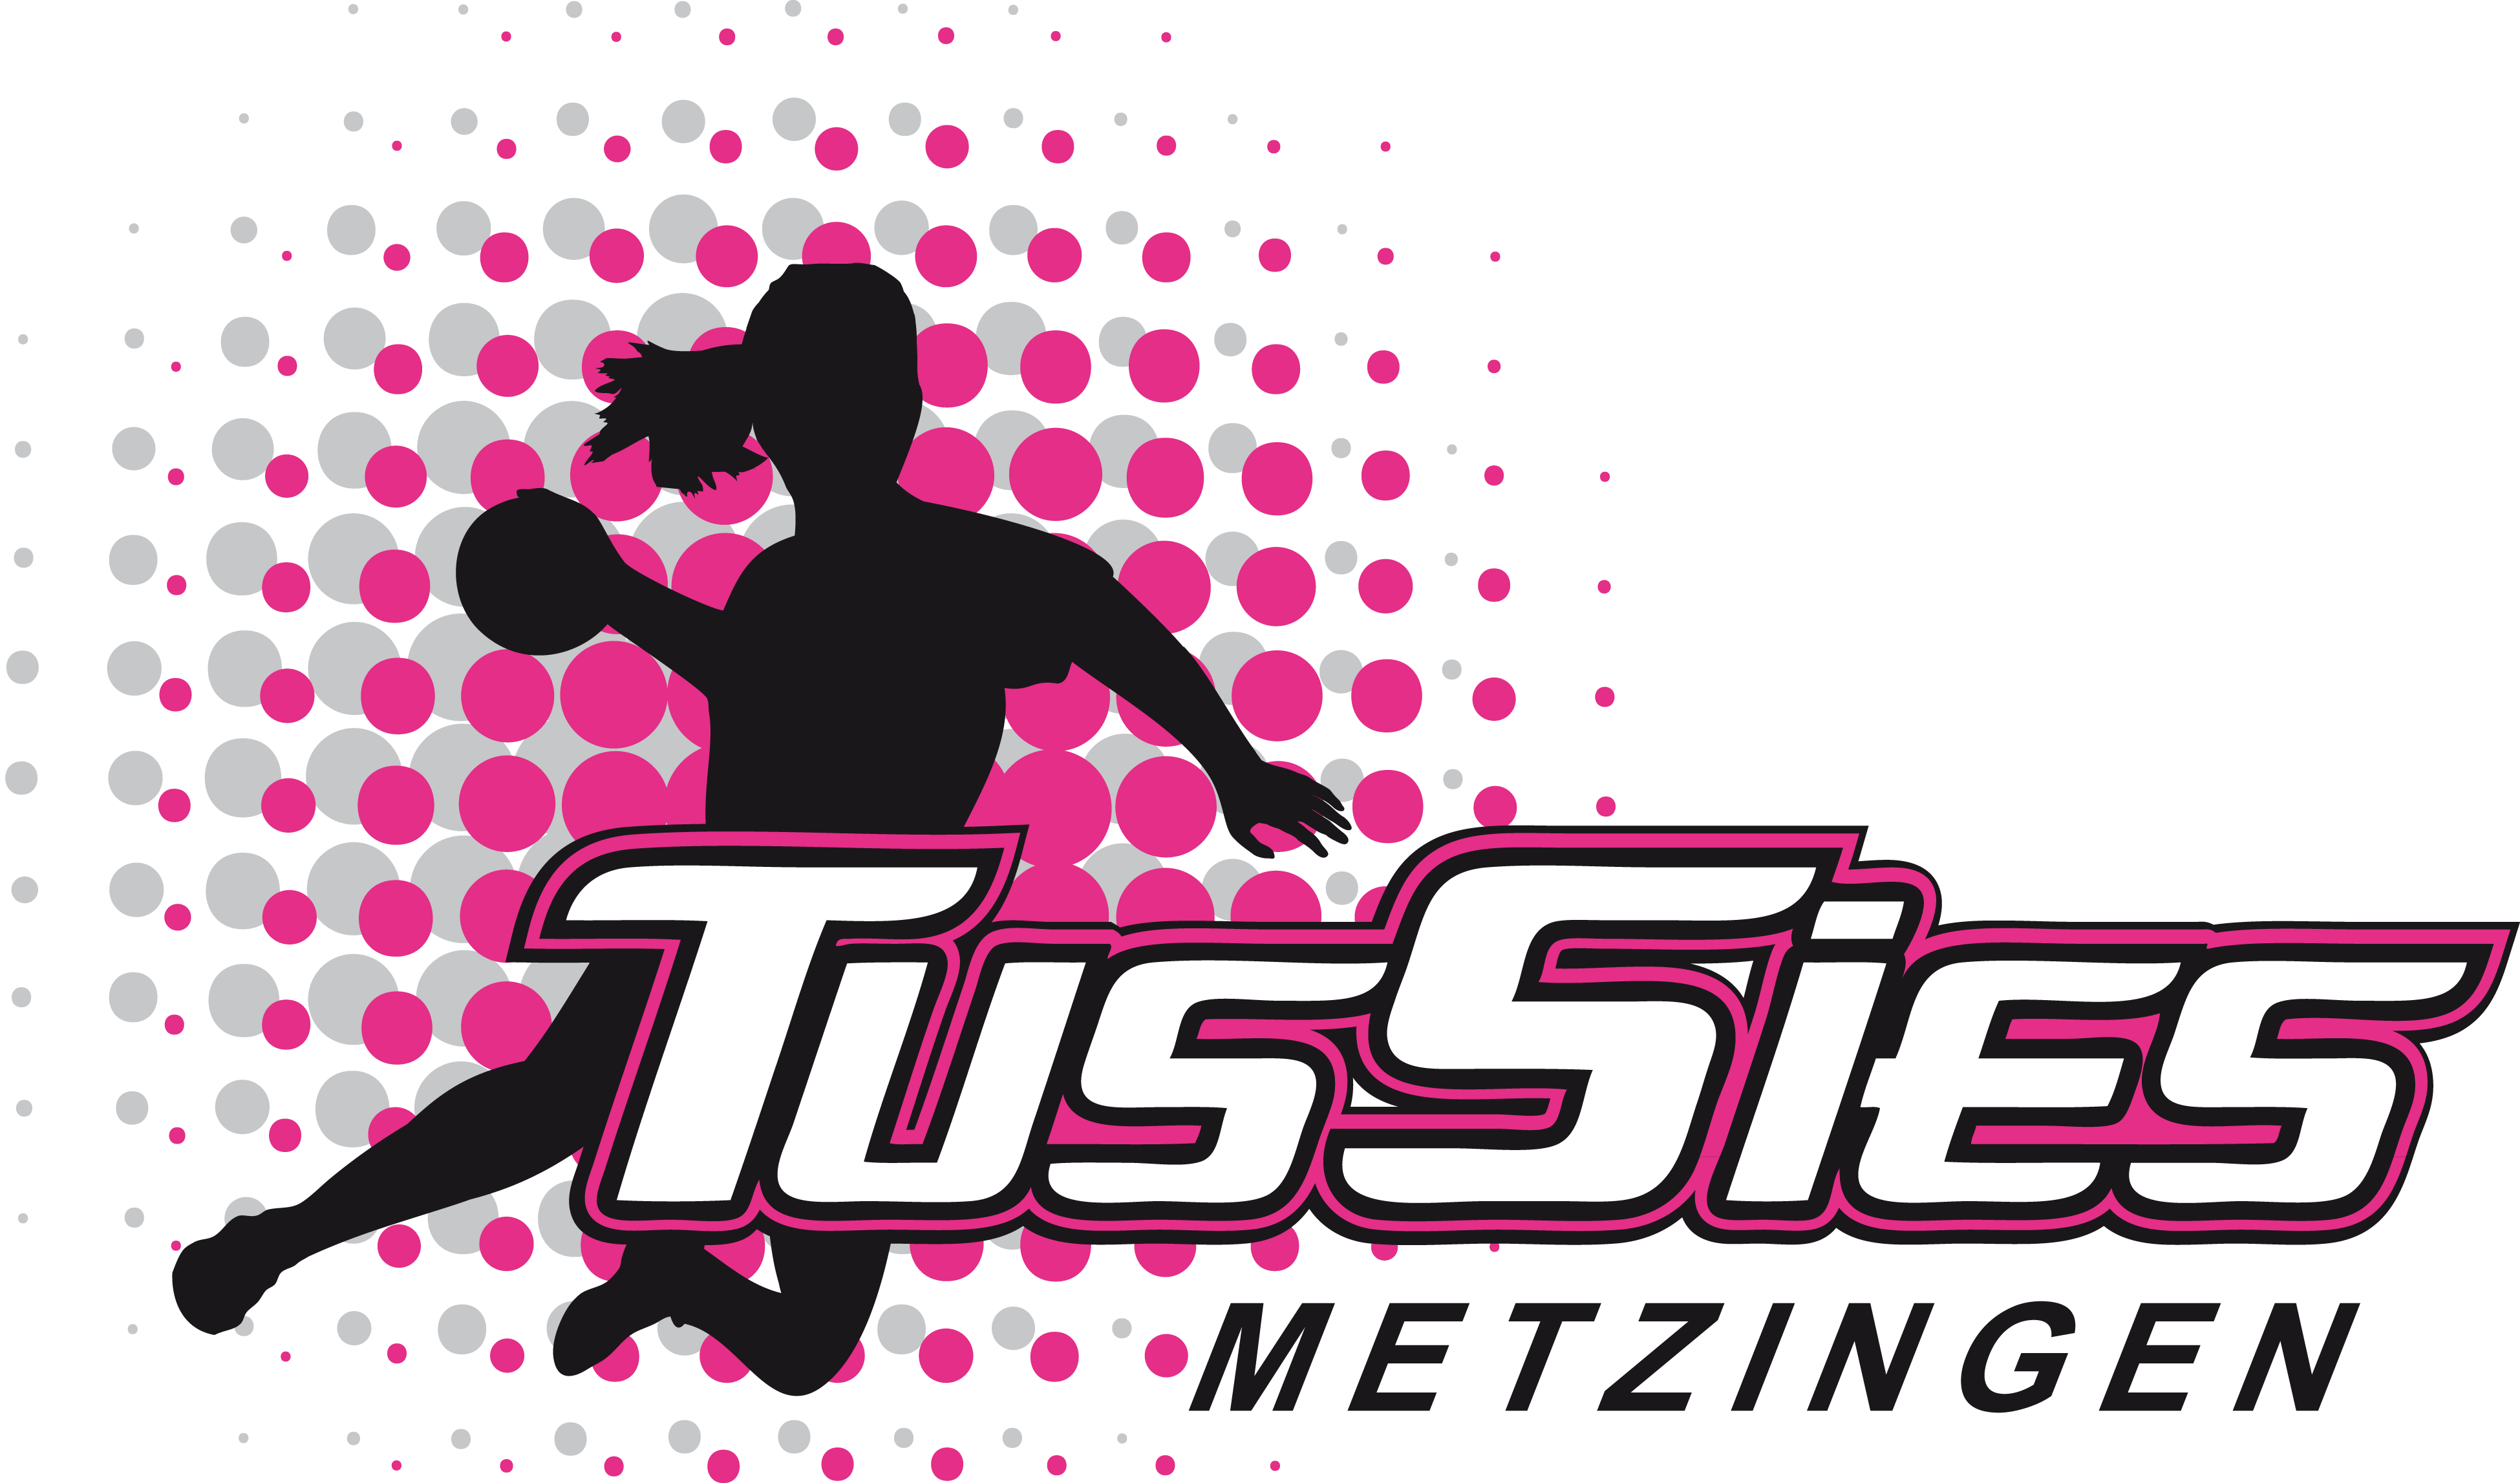 TusSies Metzingen